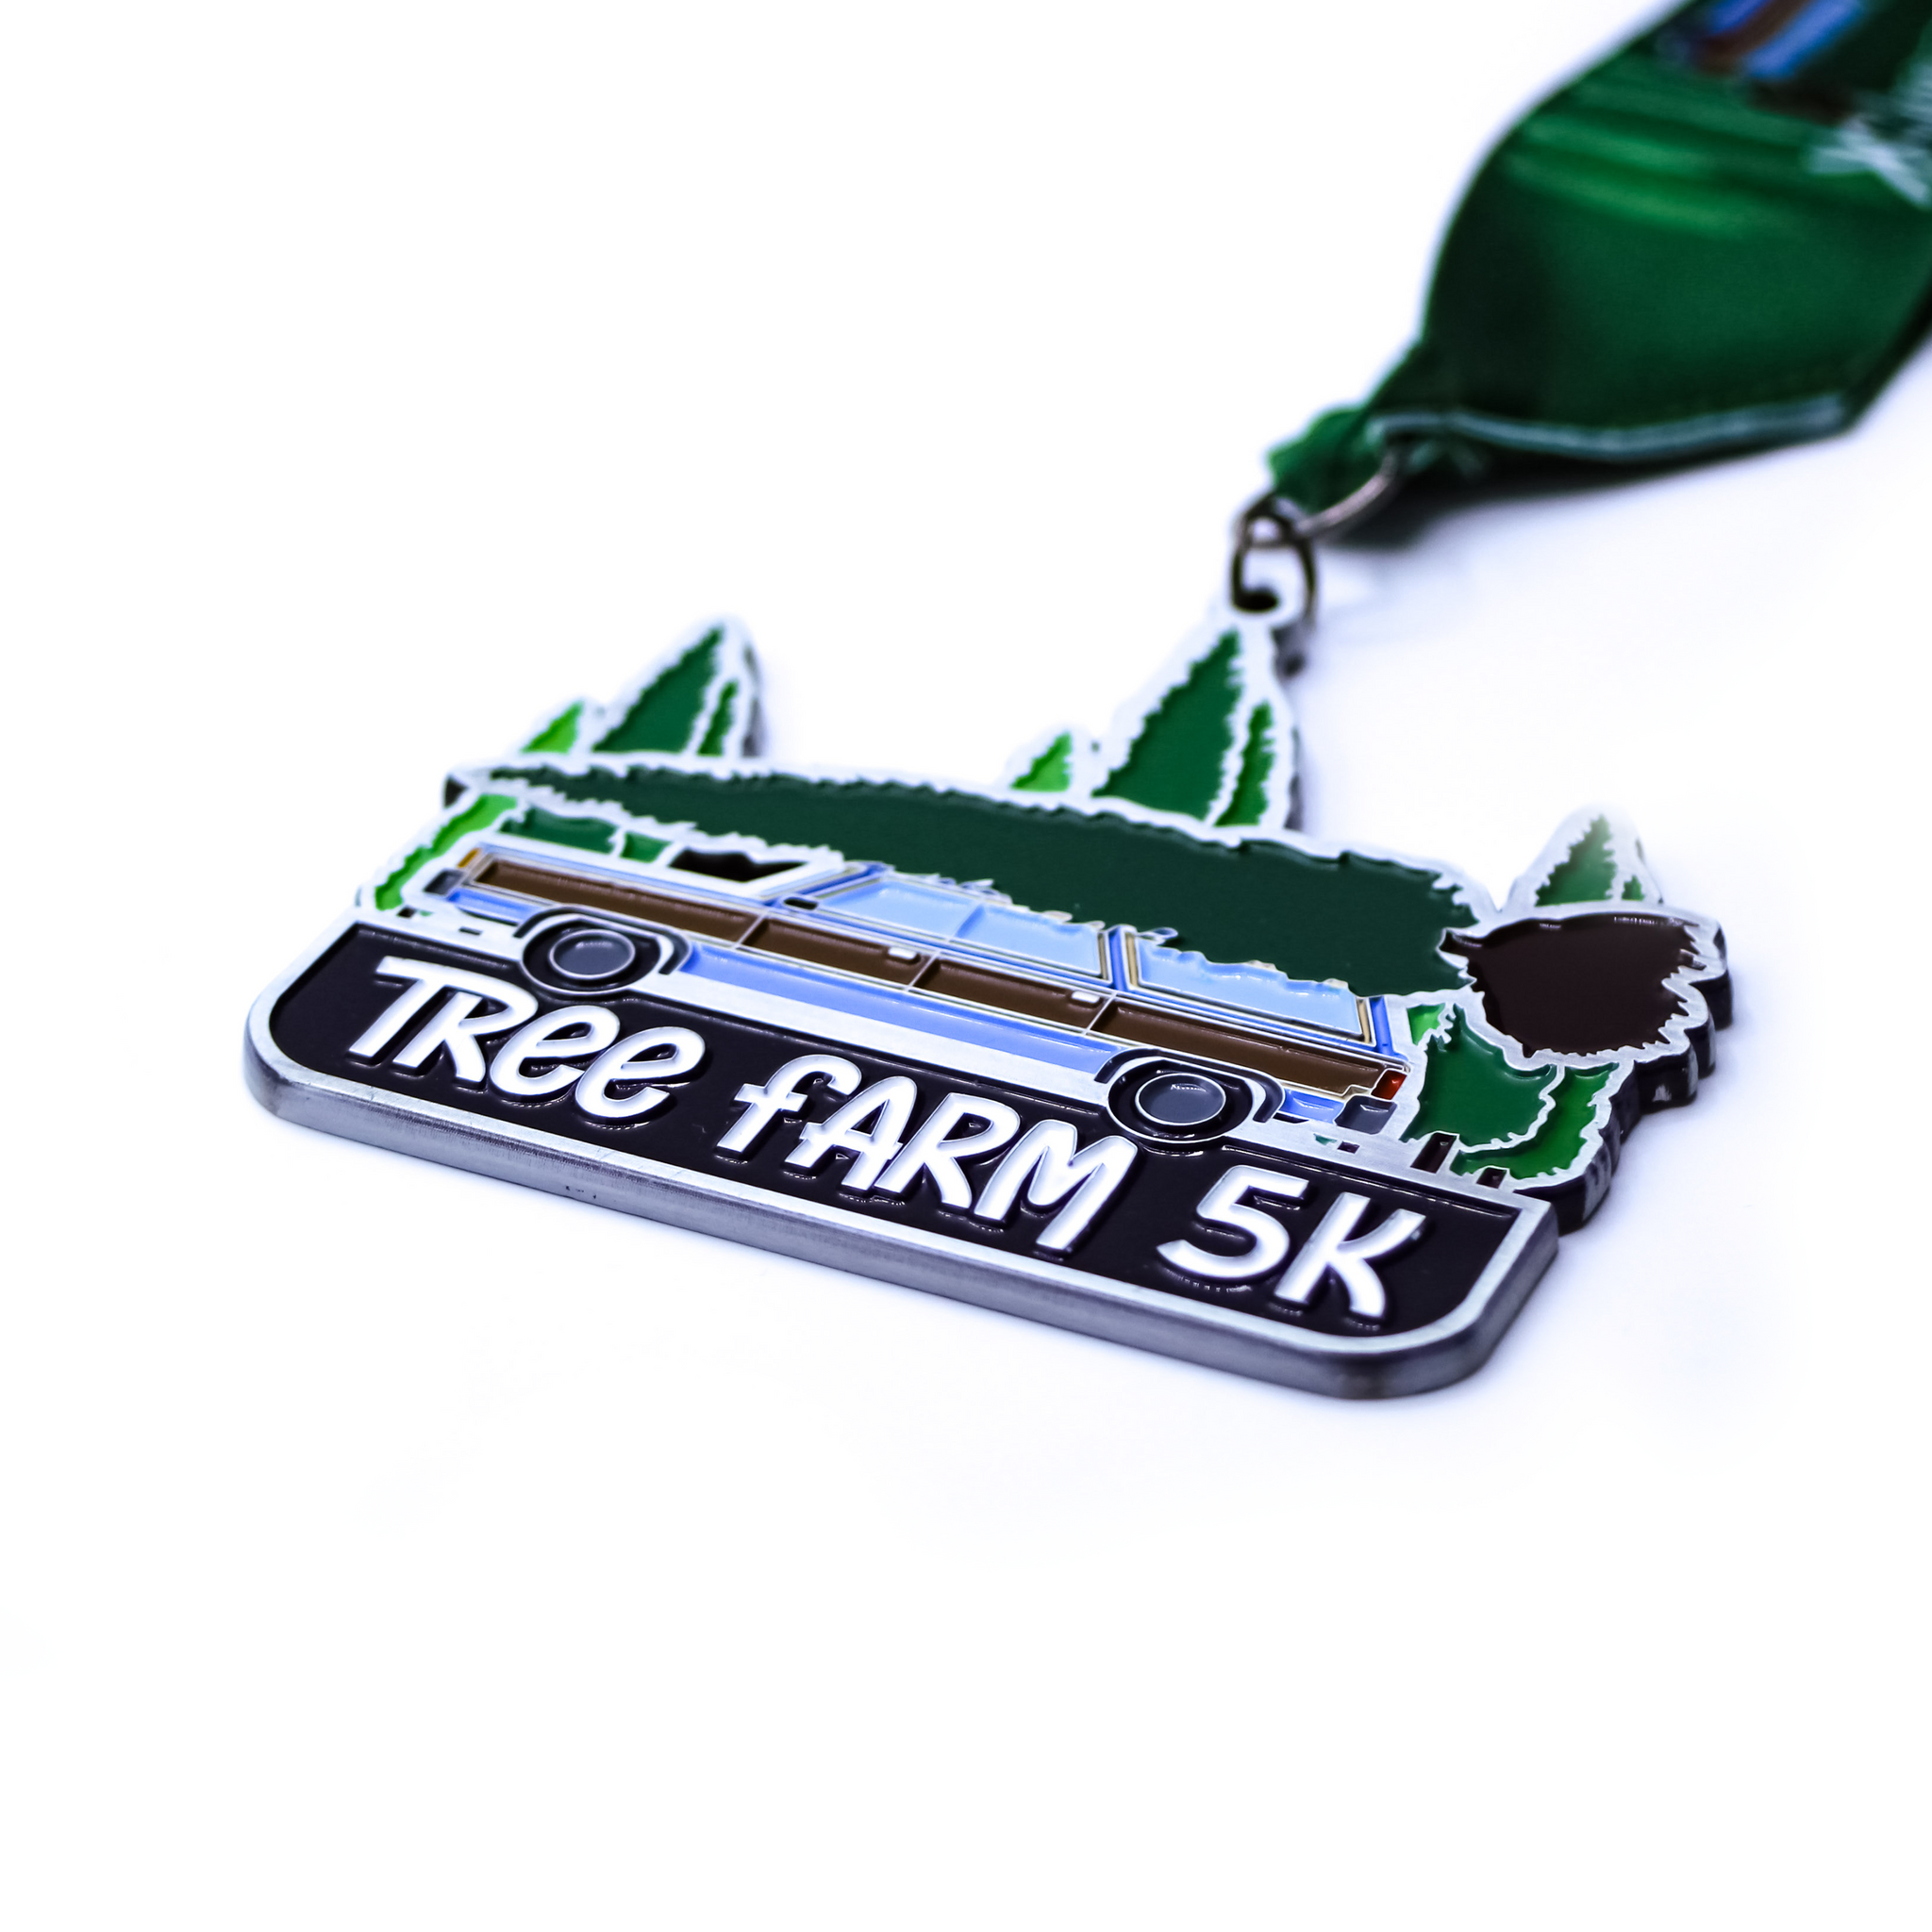 Tree Farm 5k - Entry + Medal